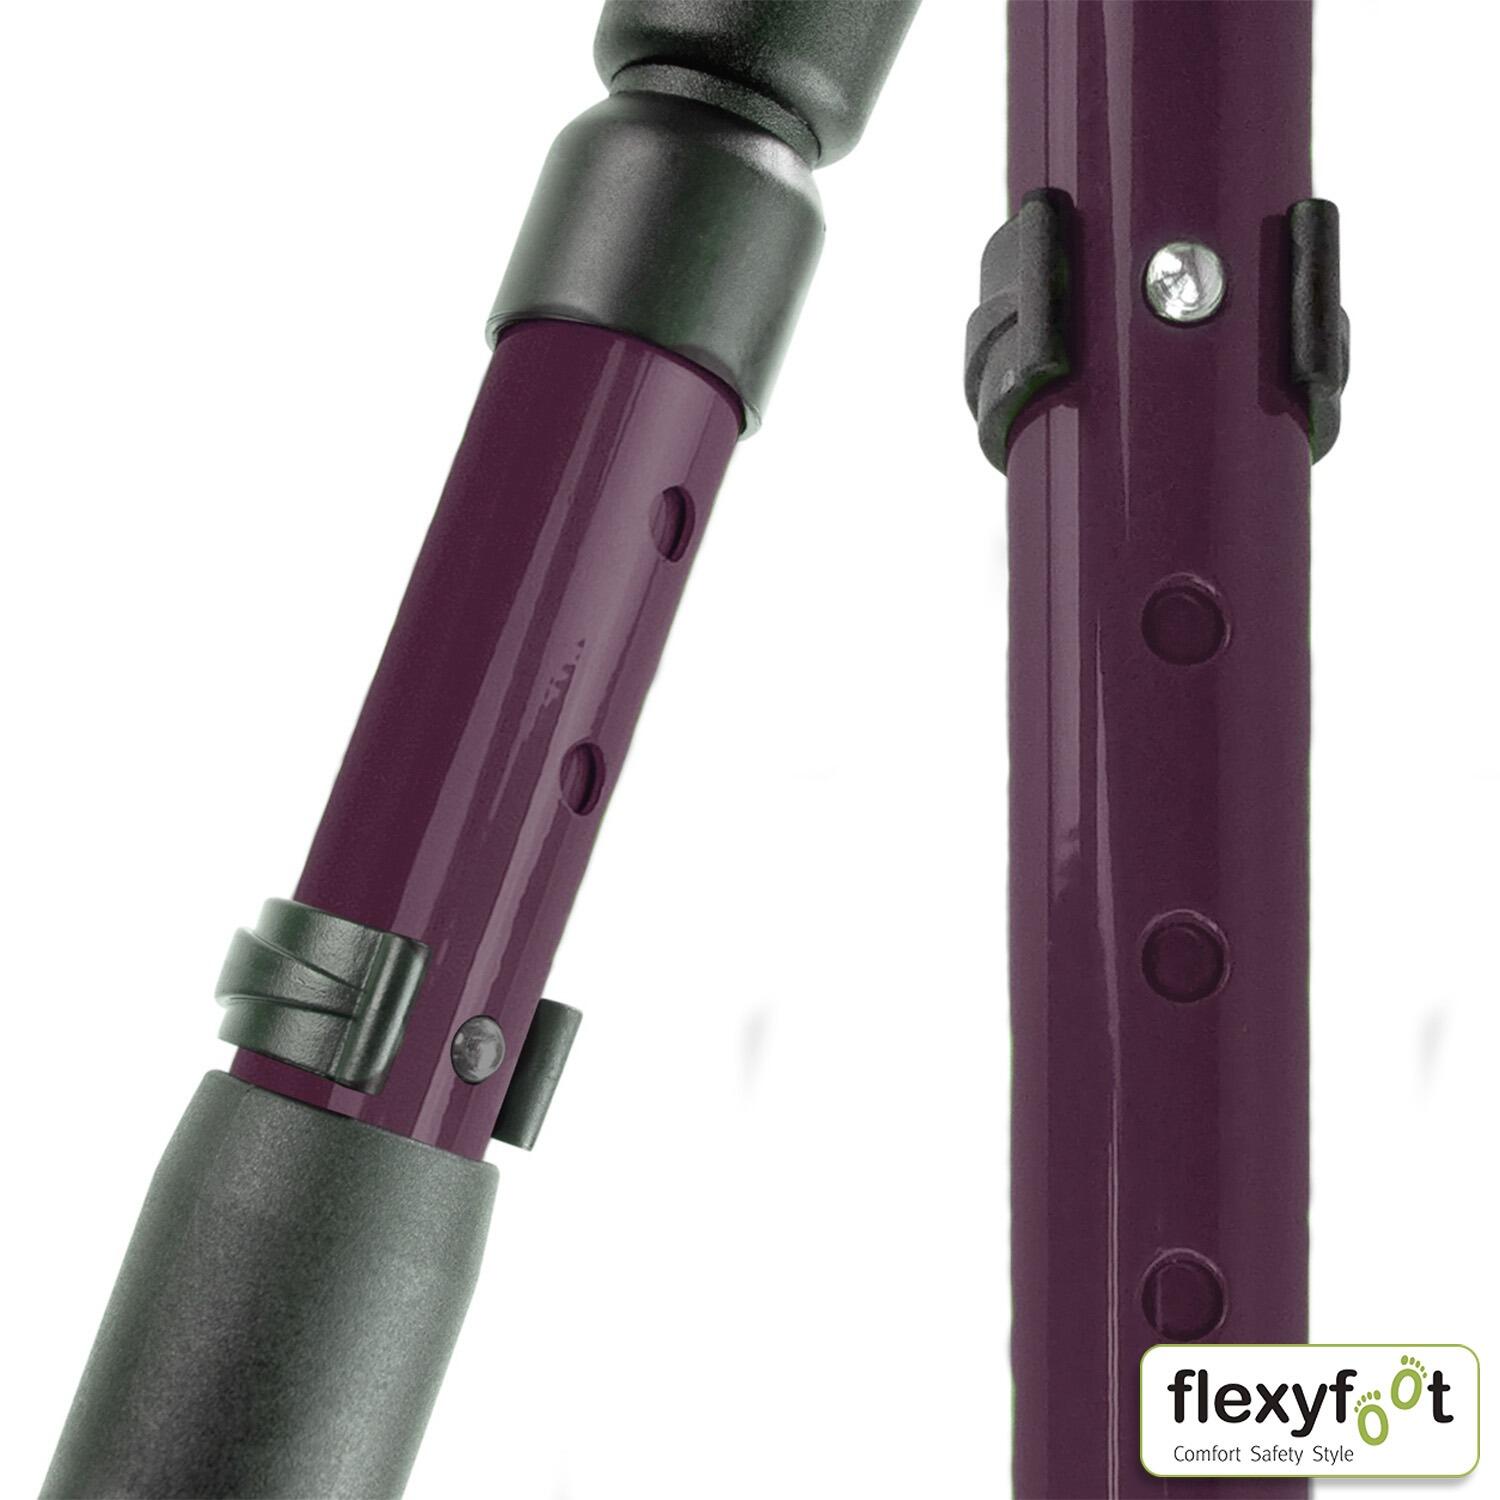 Flexyfoot Soft Grip Shock Absorbing Crutch - Blackberry - Adjustments